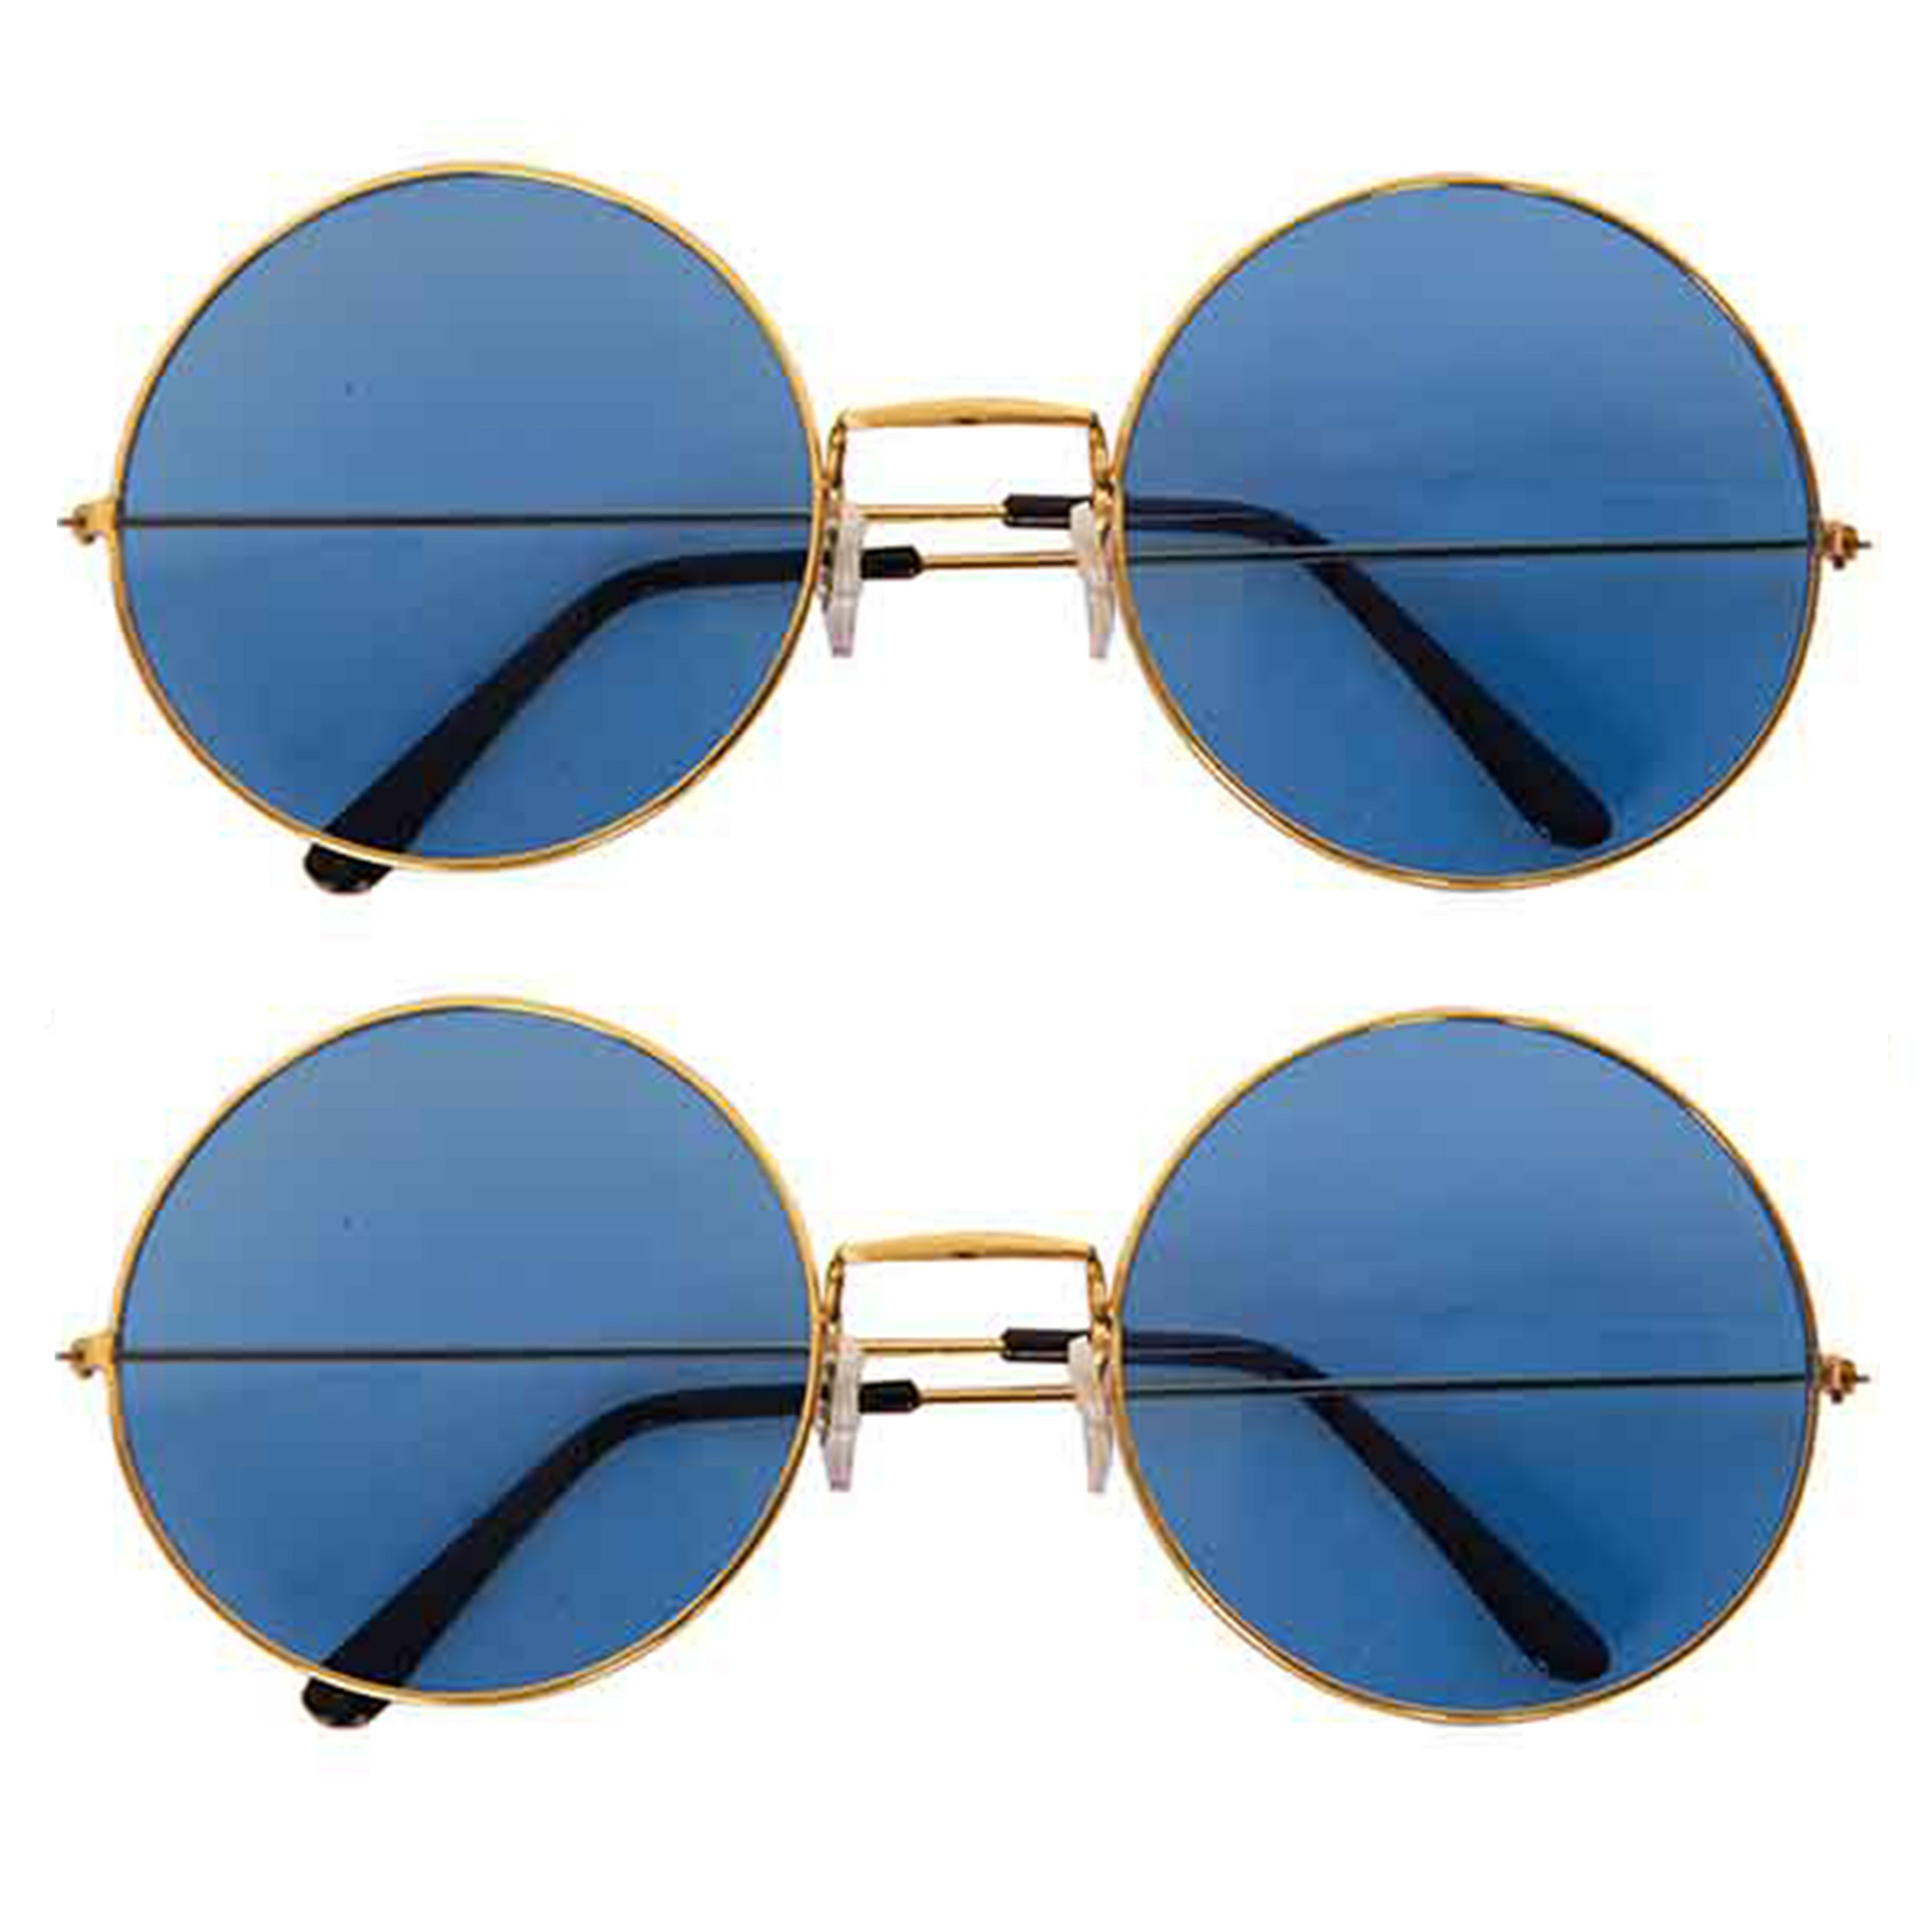 2x stuks Hippie Flower Power Sixties ronde glazen zonnebril blauw